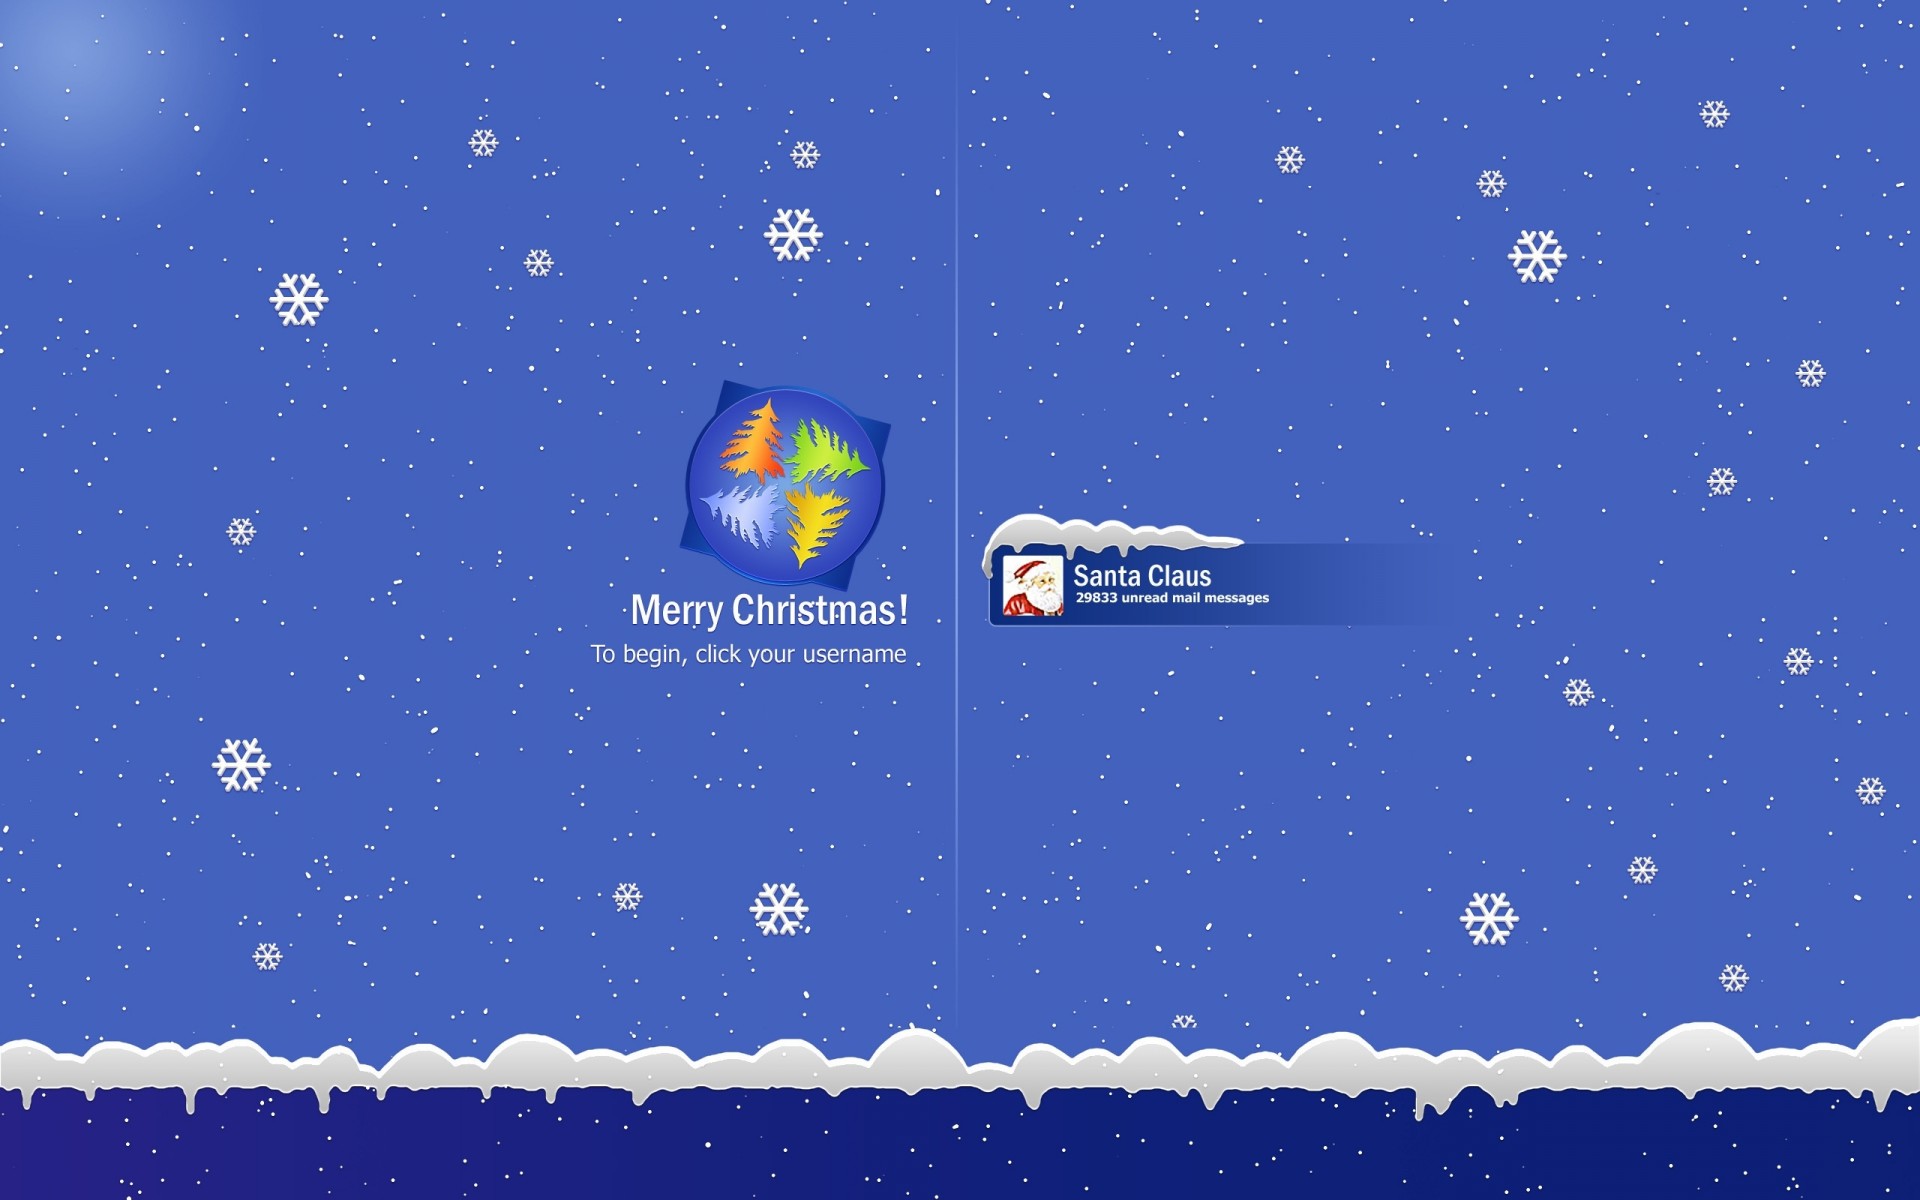 holidays, Christmas, Seasons, Windows, Microsoft, Tech, Computer, Santa, Flakes, Snowing Wallpaper